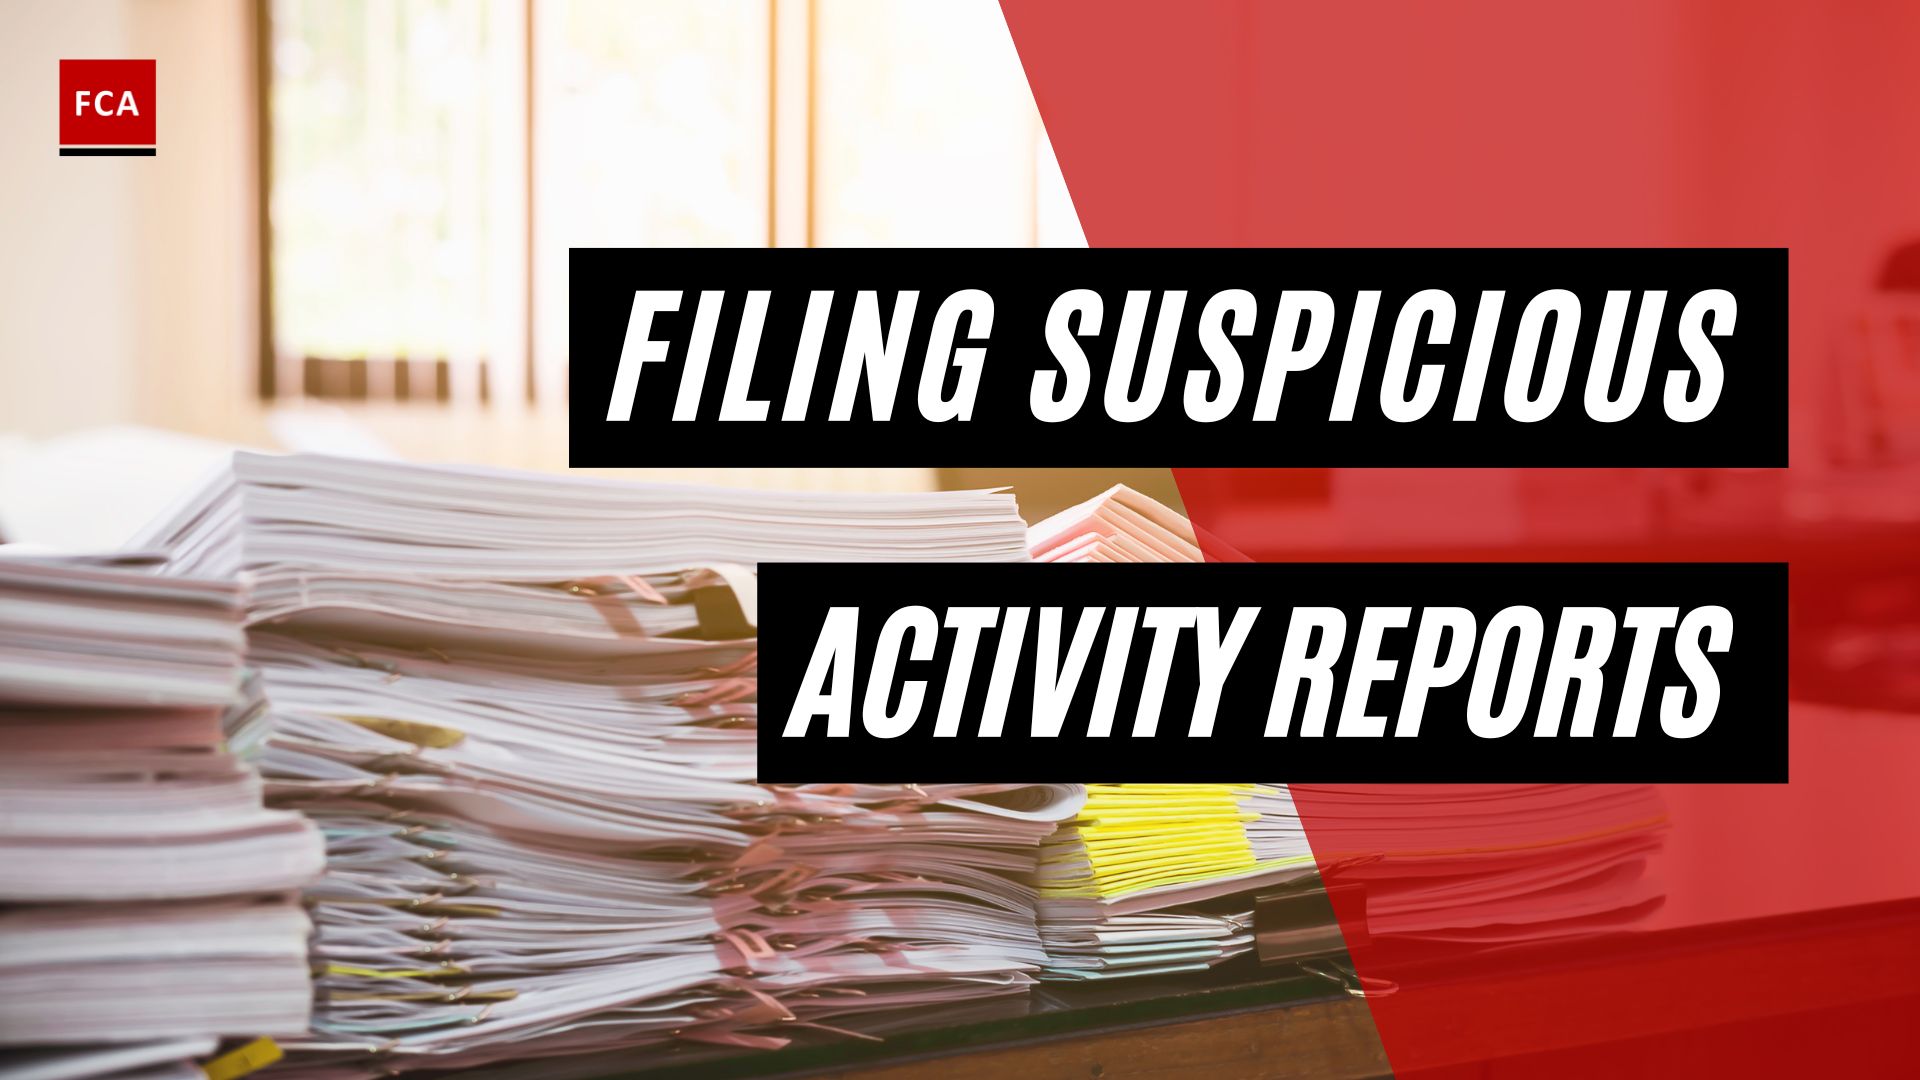 Filing Suspicious Activity Reports